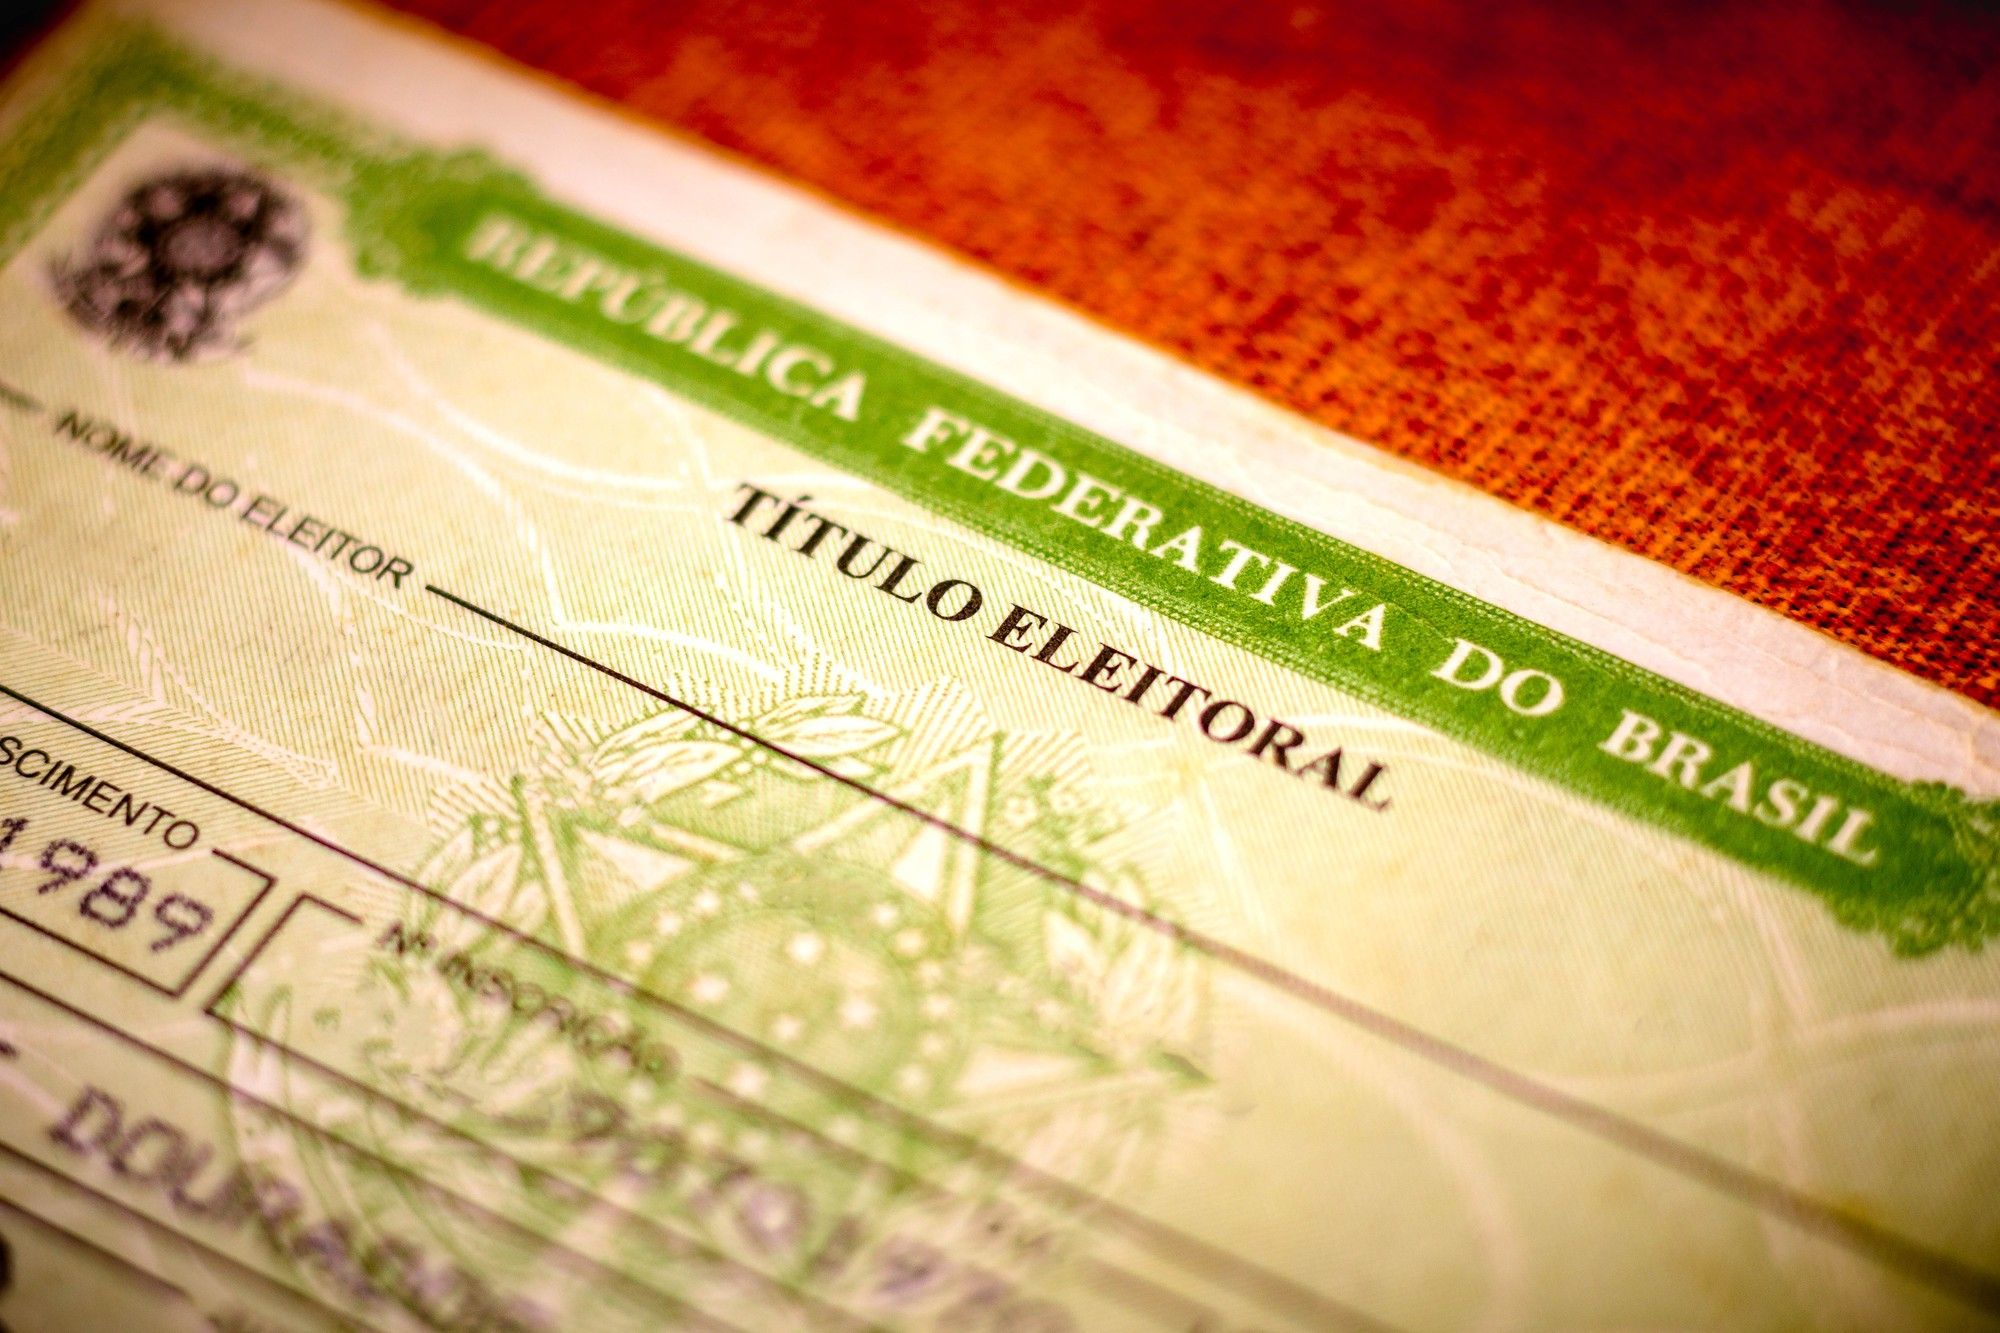 portugal-to-scrap-its-golden-visa-scheme-pm-says